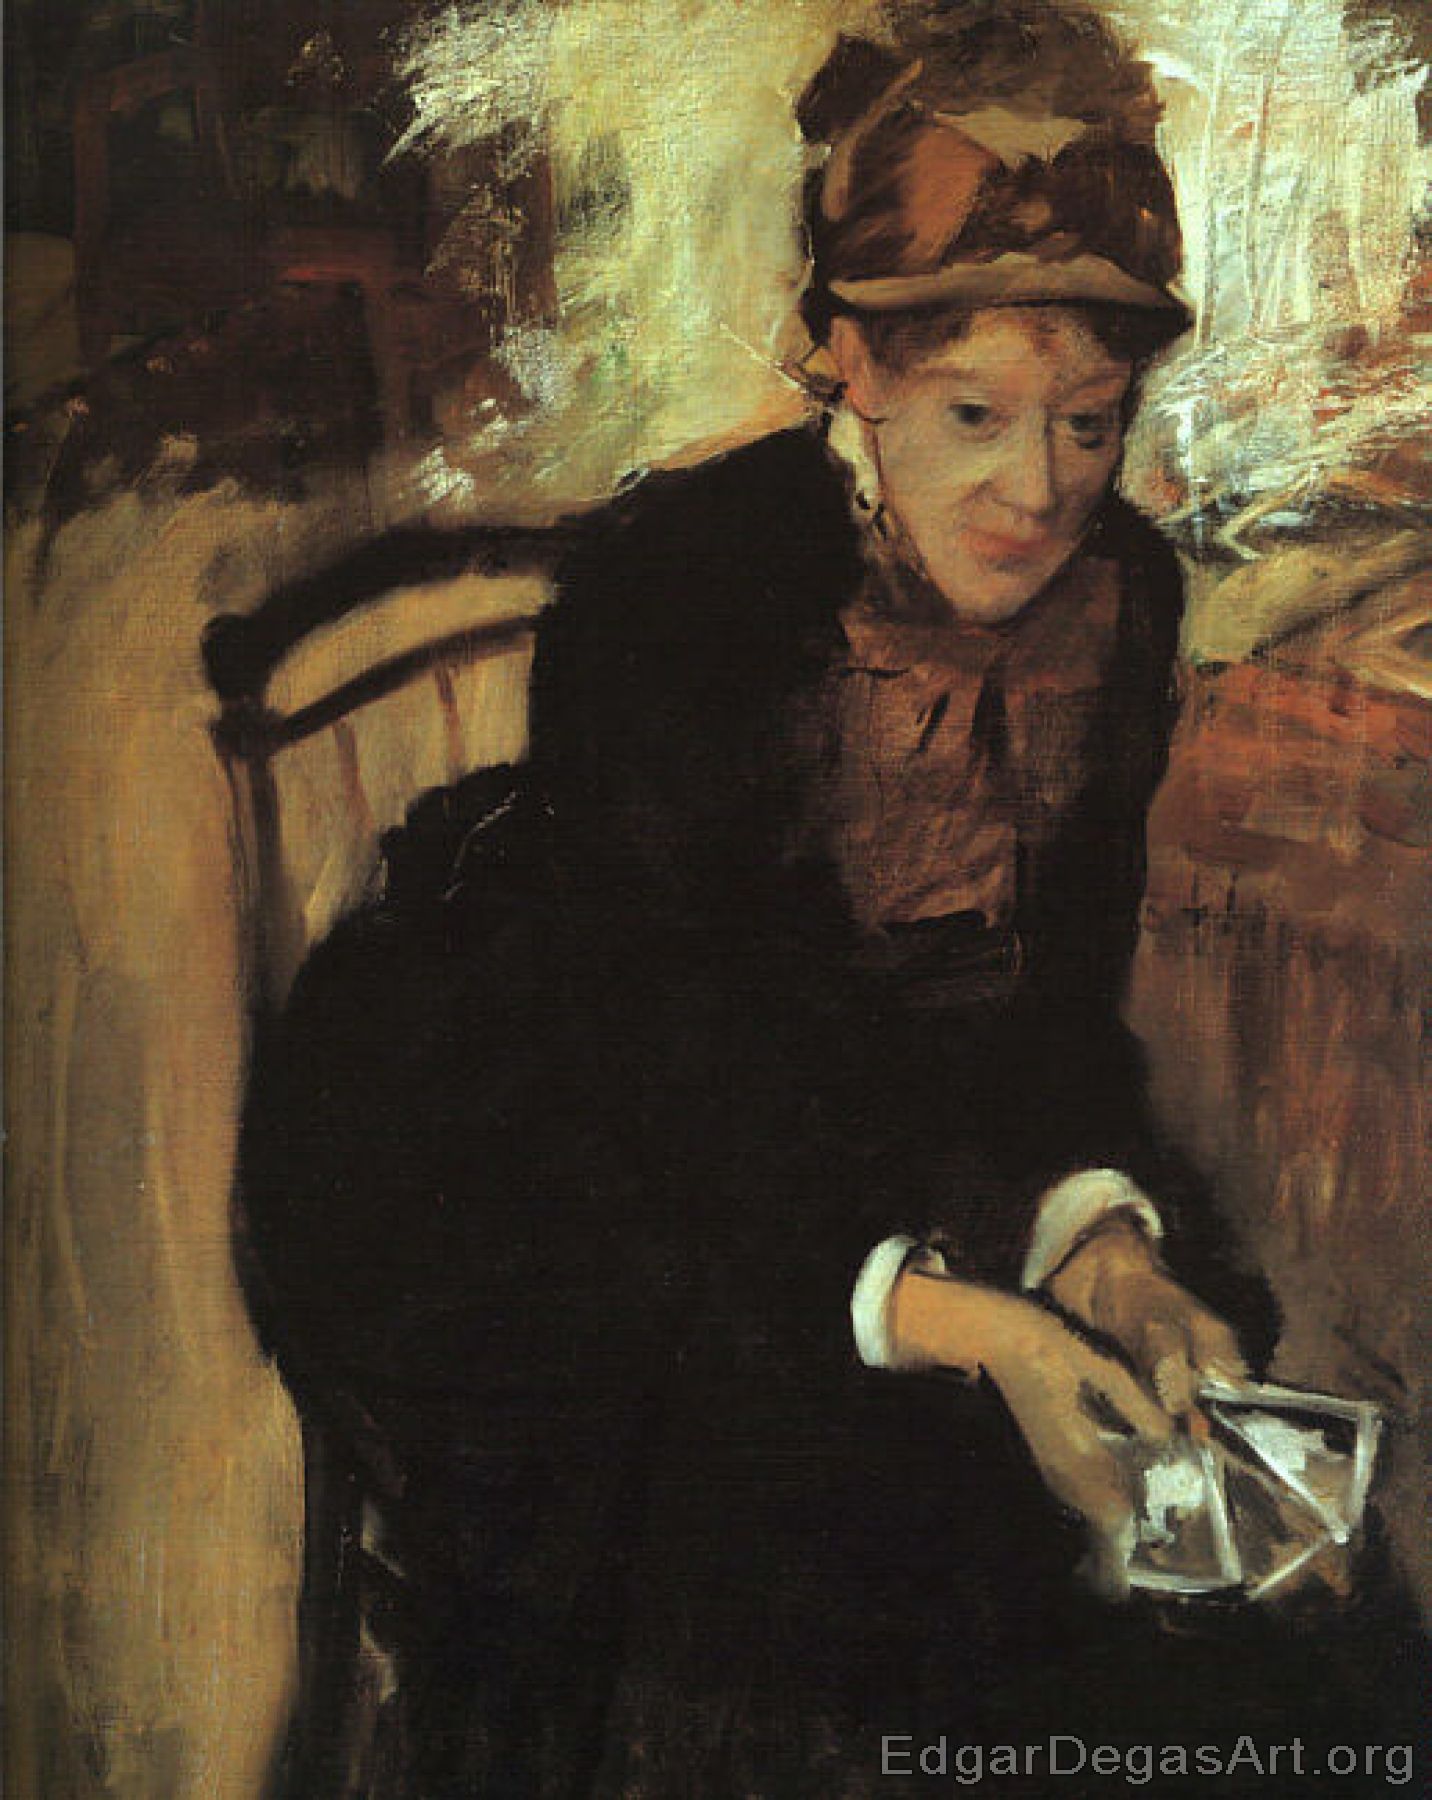 Portrait of Mary Cassatt